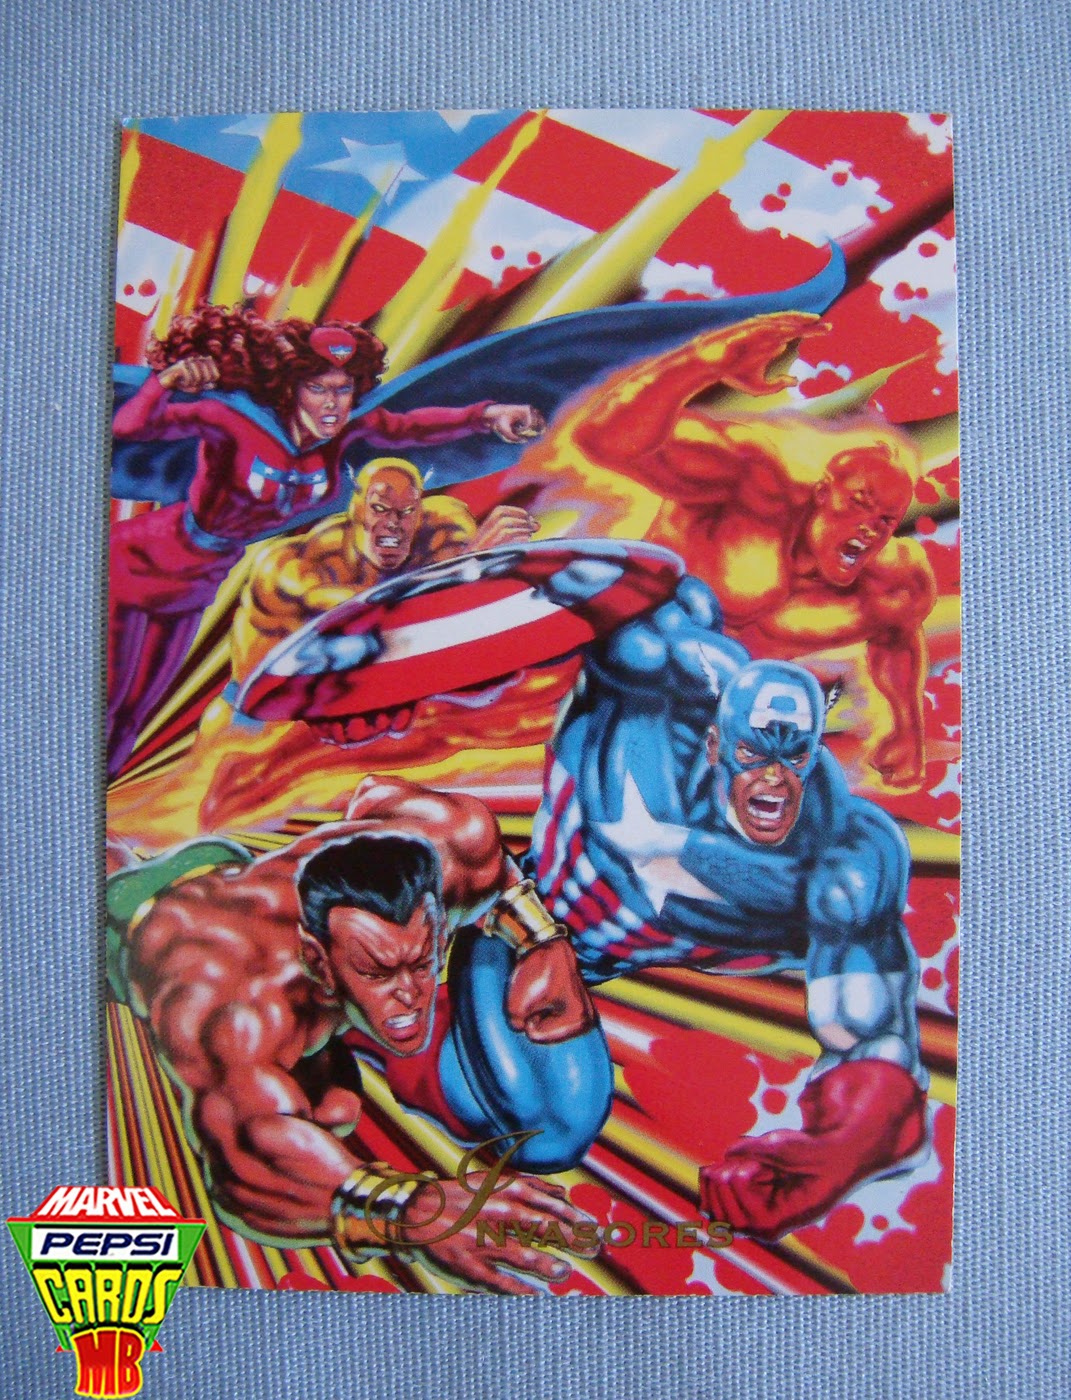 MarvelPepsiCardsMB Marvel Pepsi Cards MX 1994 27